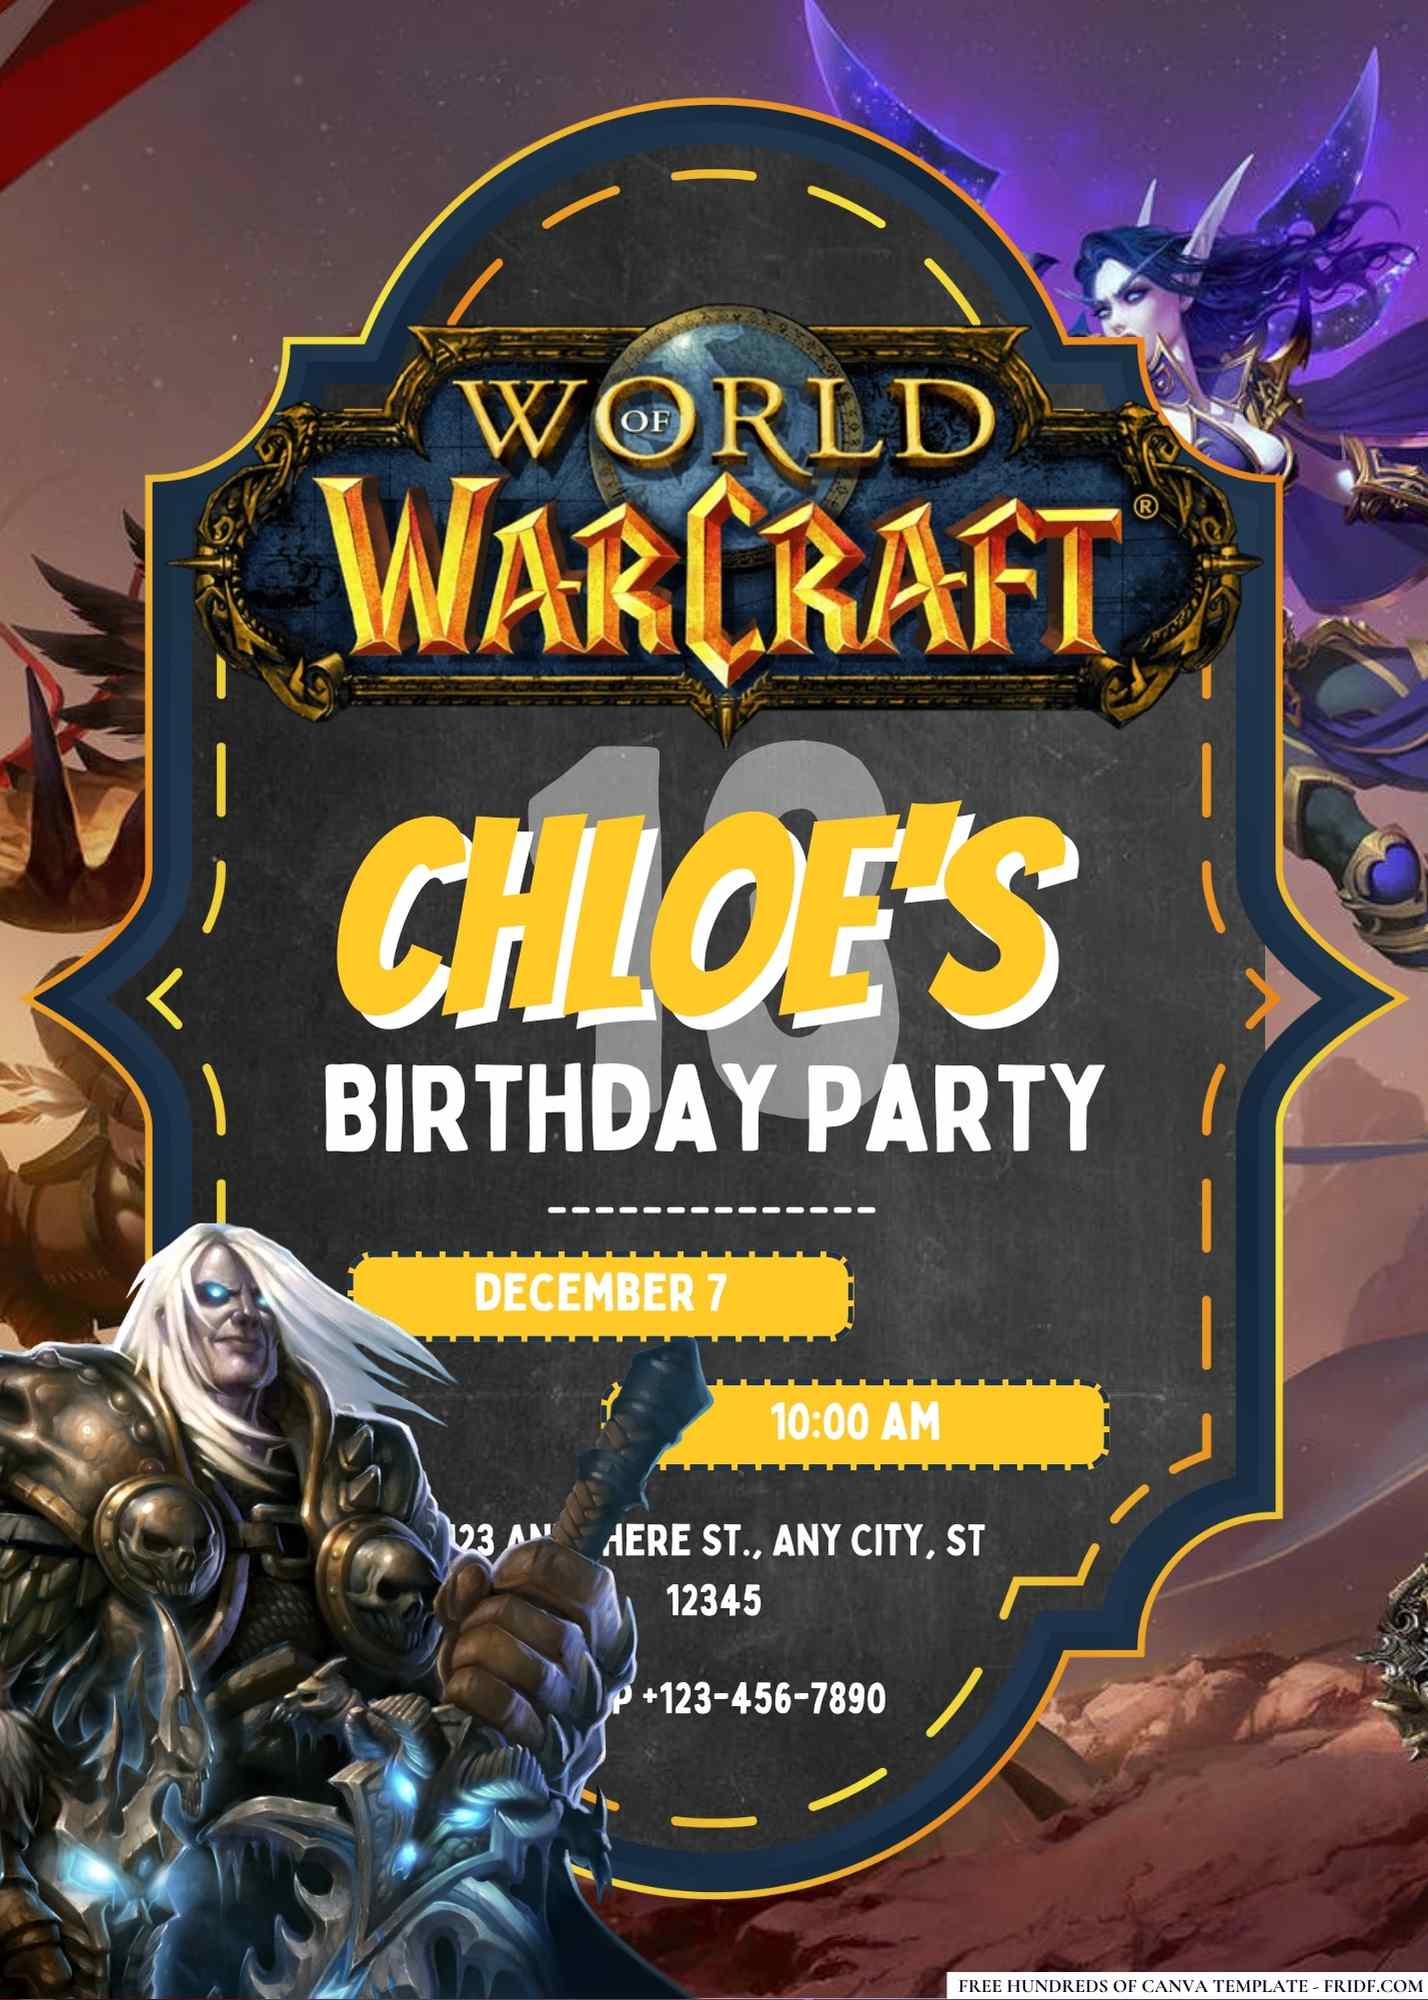 FREE Editable World of Warcraft Birthday Invitation 